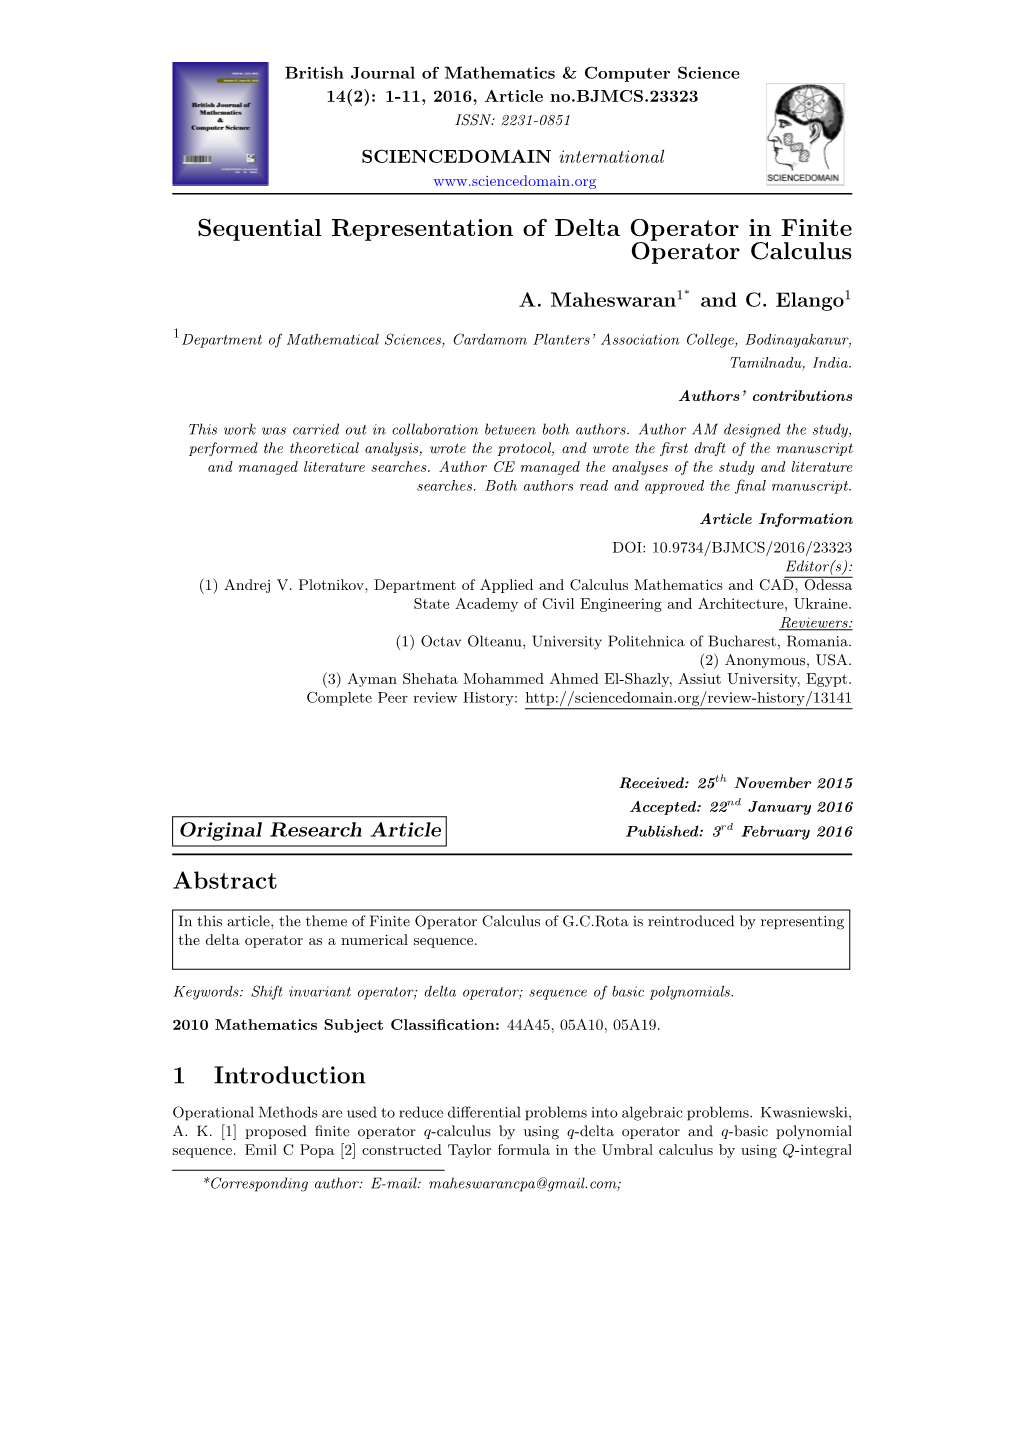 Sequential Representation of Delta Operator in Finite Operator Calculus